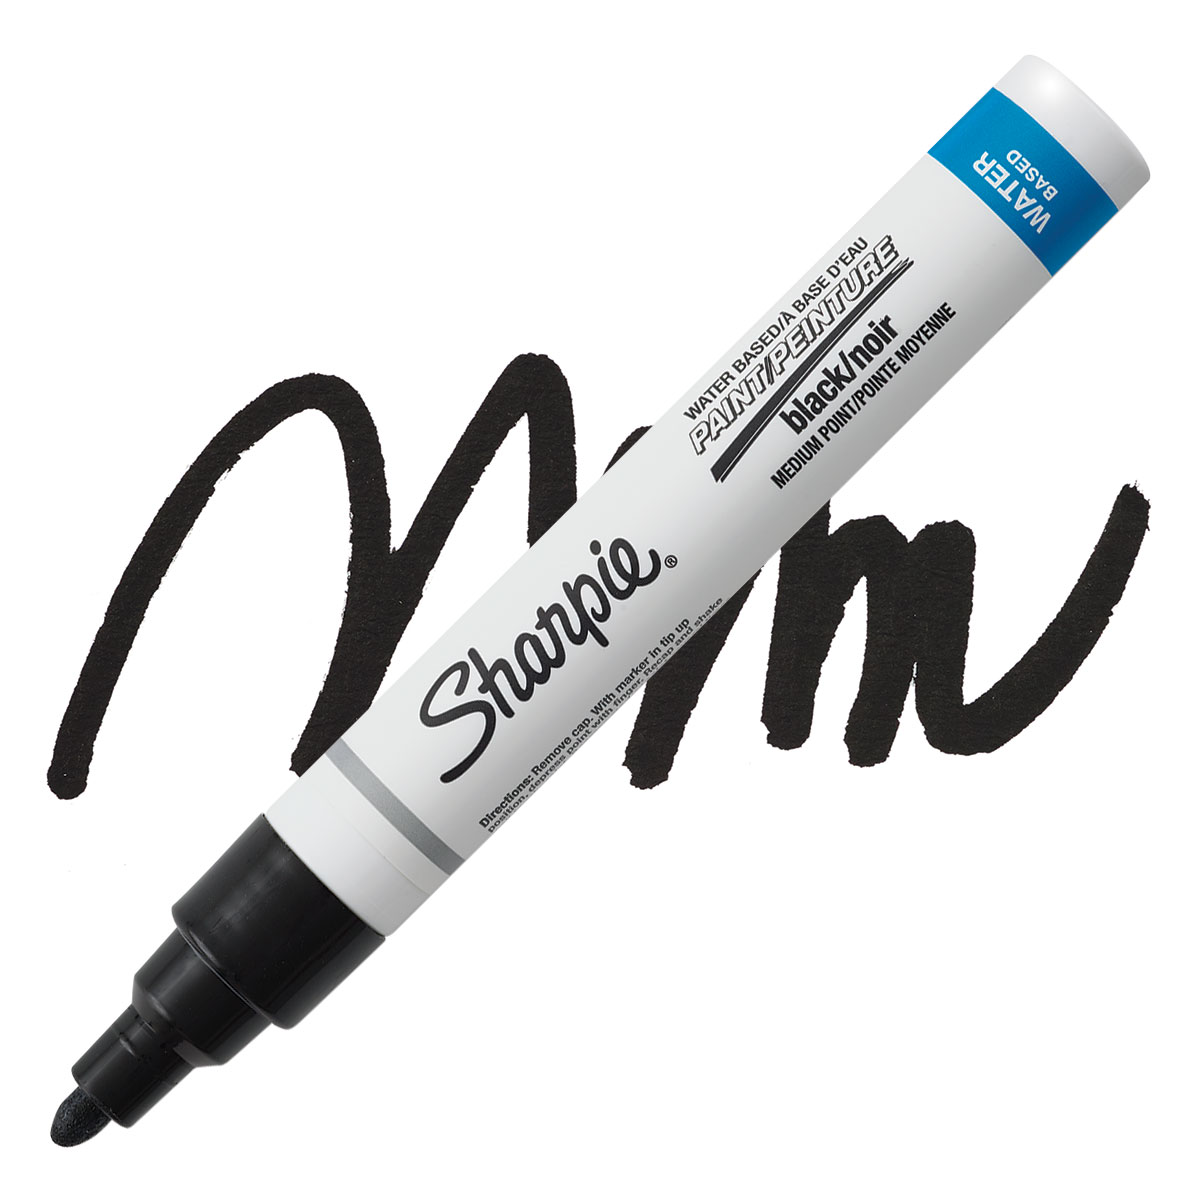 Sharpie Permanent Paint Marker Medium Point Black